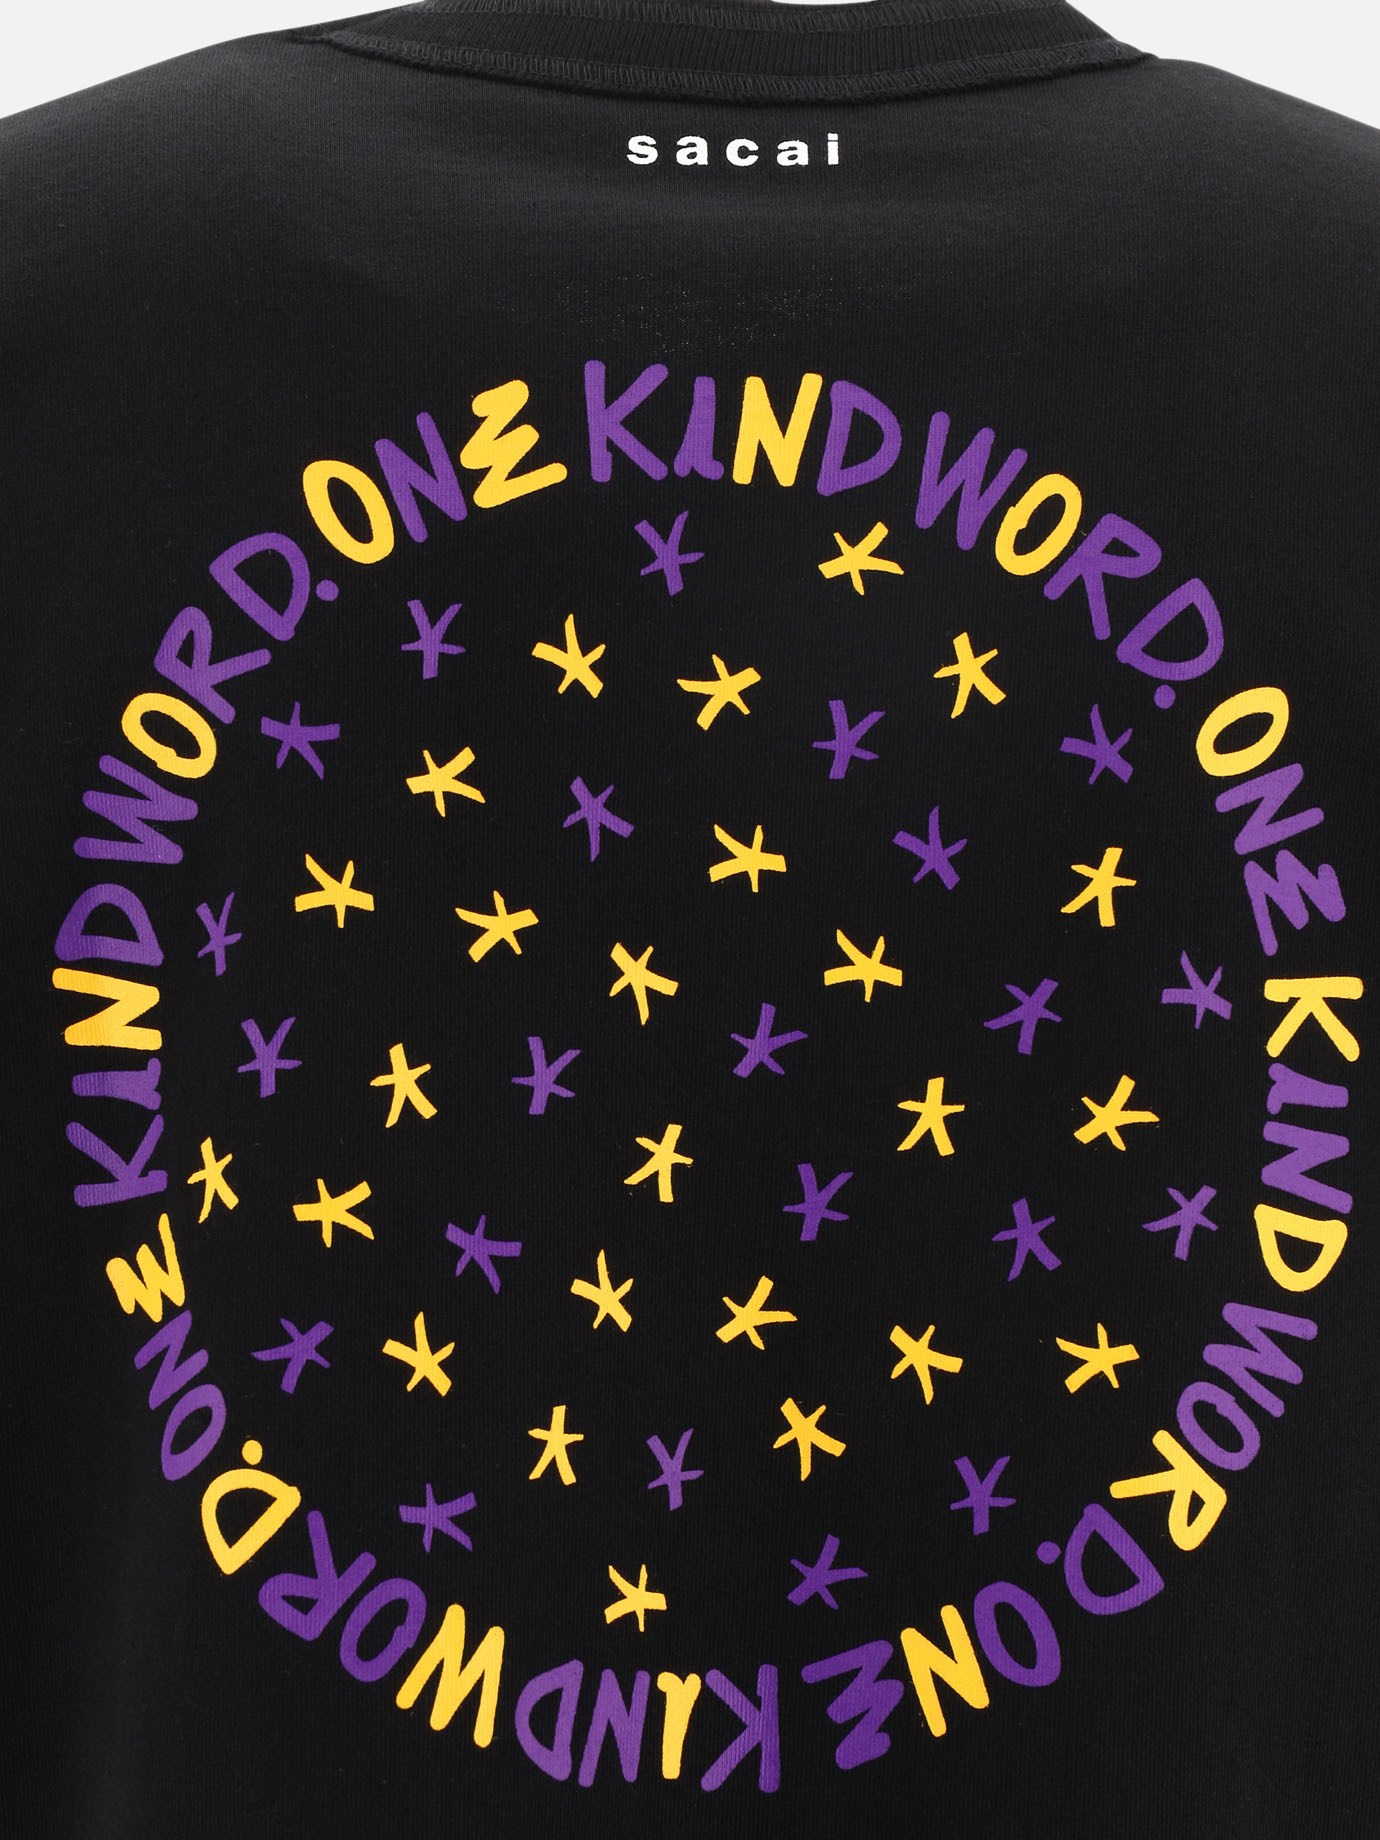 T-shirt Eric Haze x Sacai  One Kind Word  by Sacai